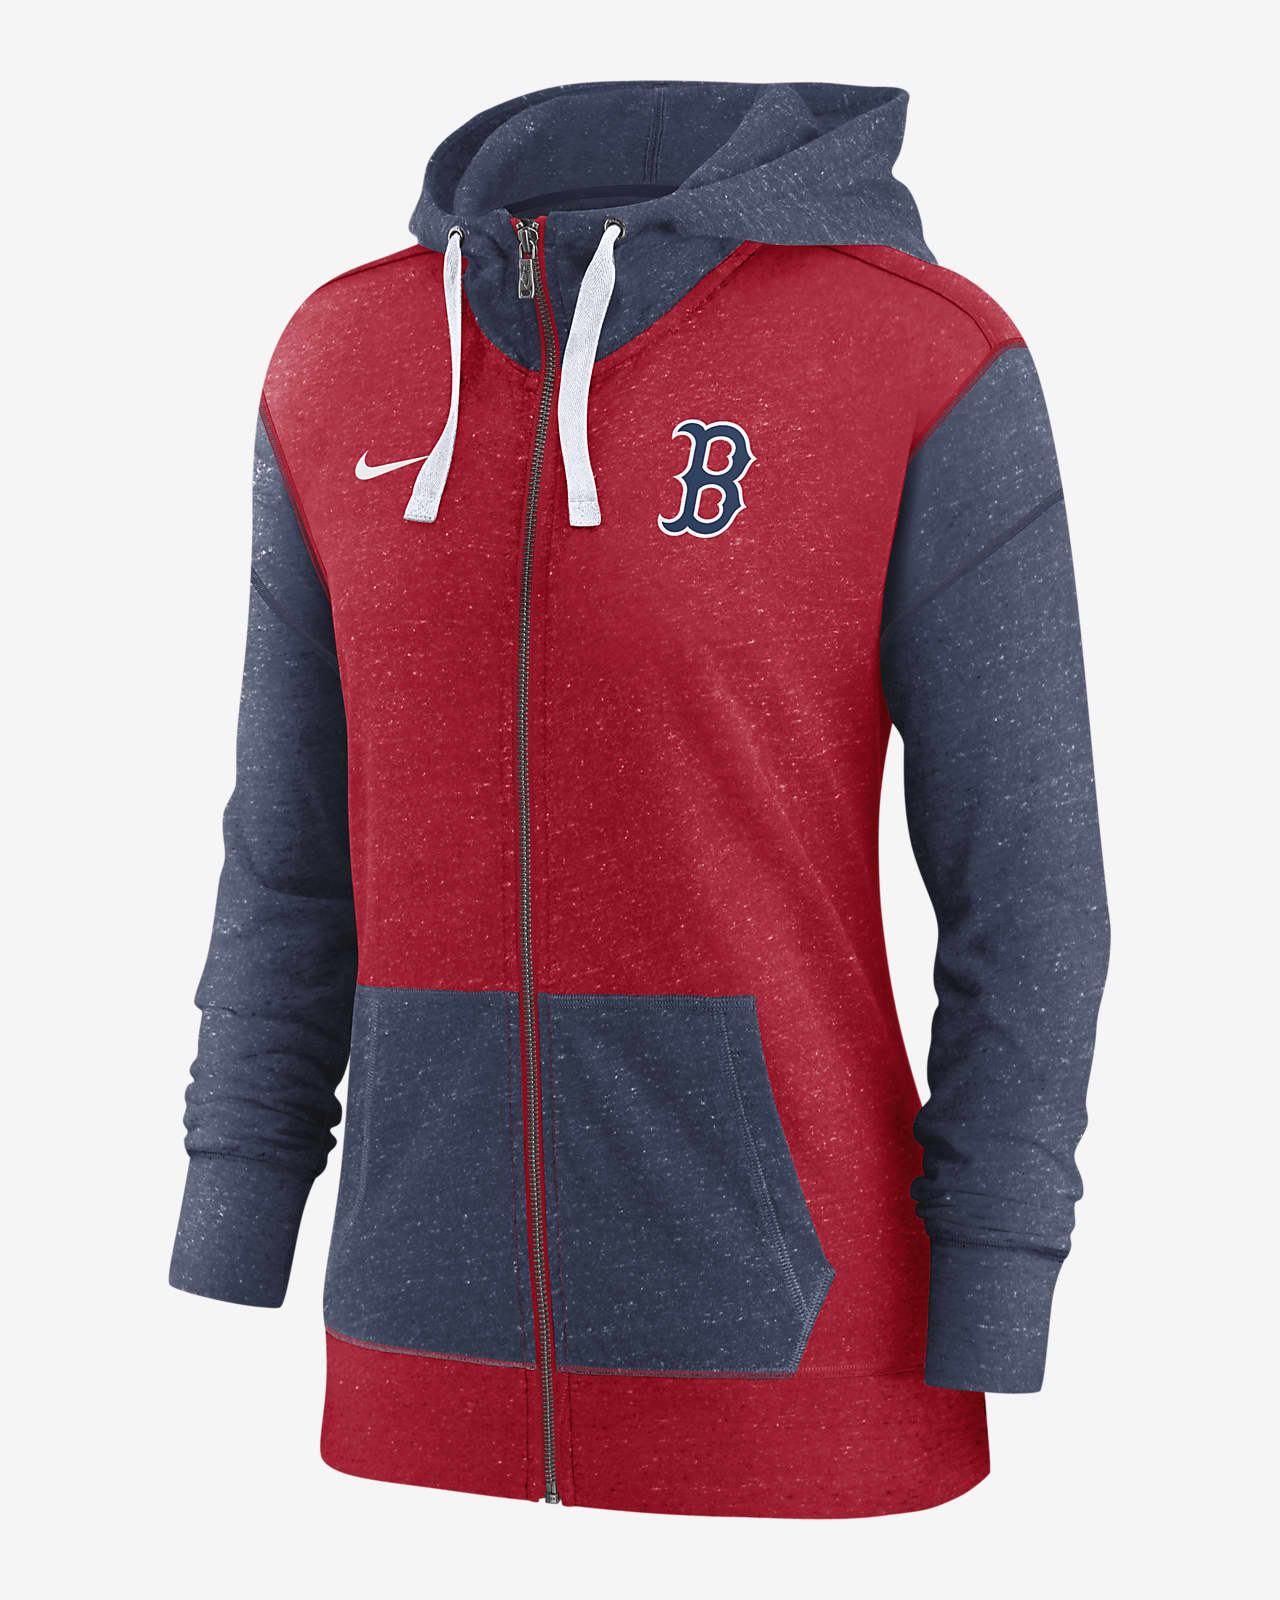 Nike Gym (MLB Boston Red Sox) Women's Full-Zip Hoodie